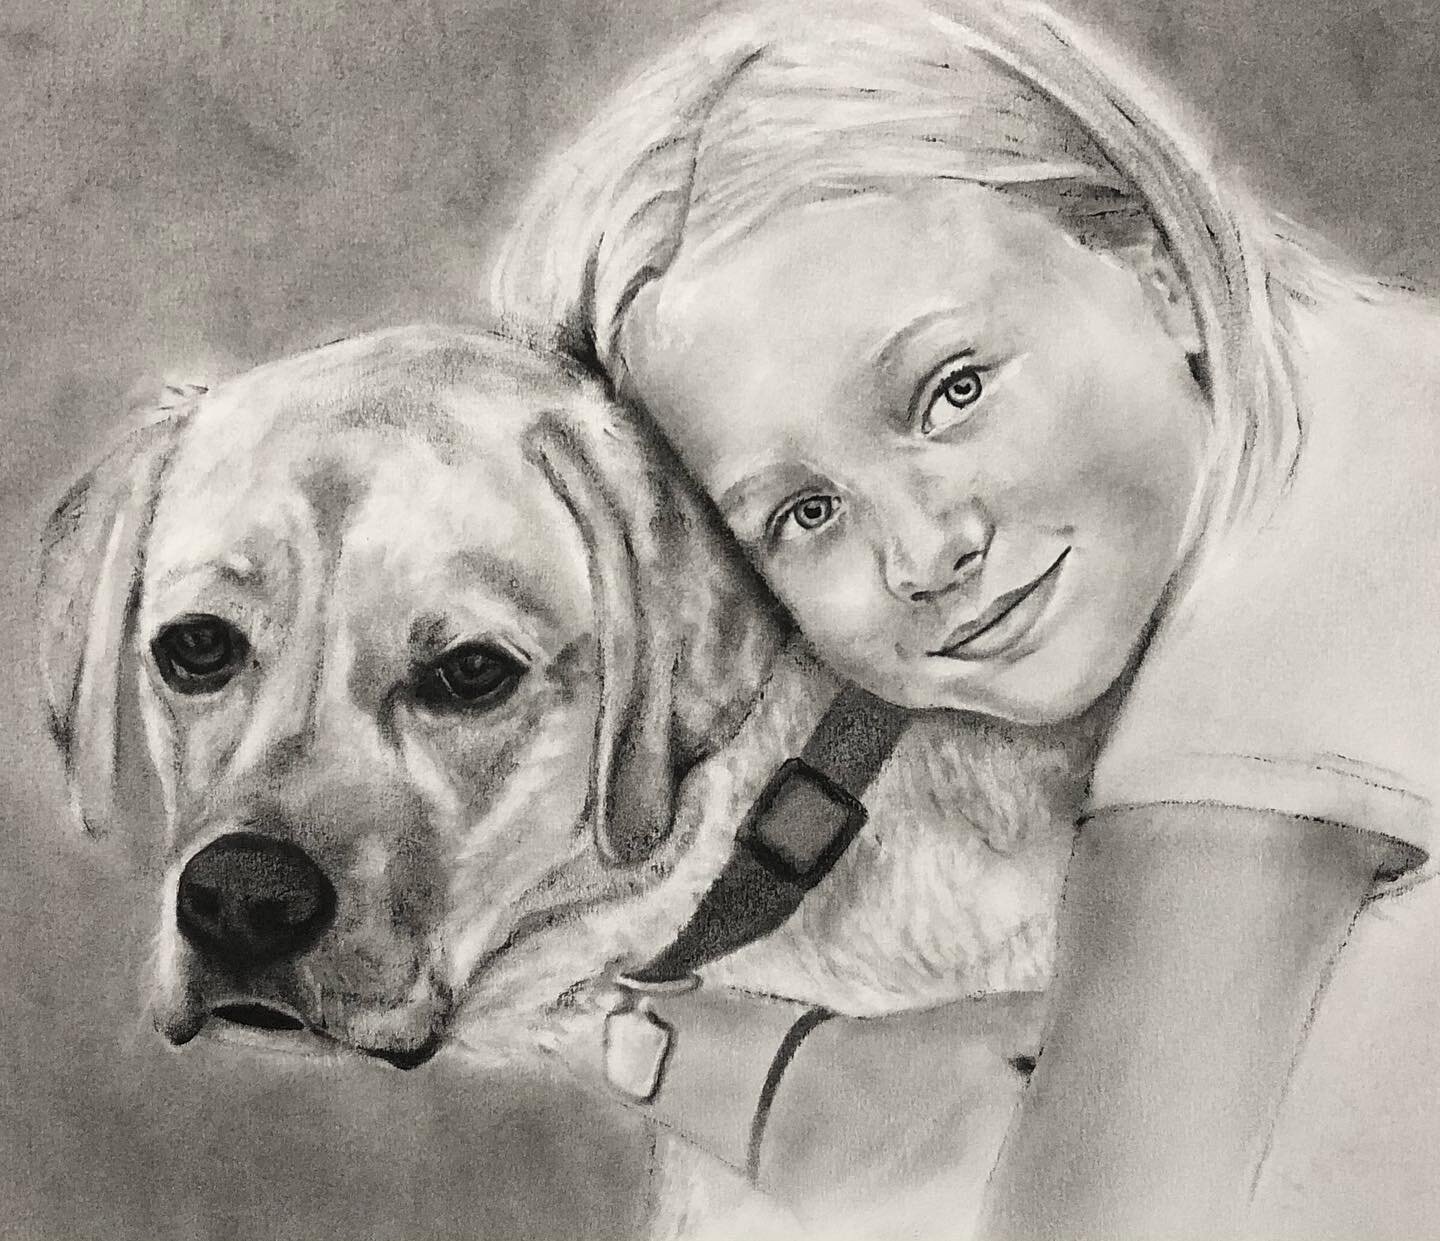 Just a girl and her dog...
16x12&rdquo;
.
#comission #art #artwork #artist #charcoal #portrait #charcoaldrawing #portraitdrawing #drawing #charcoalonpaper #sketch #figurativeartist #dailyart #kc #kcmo #kansascity #kccrossroads #crossroadskc